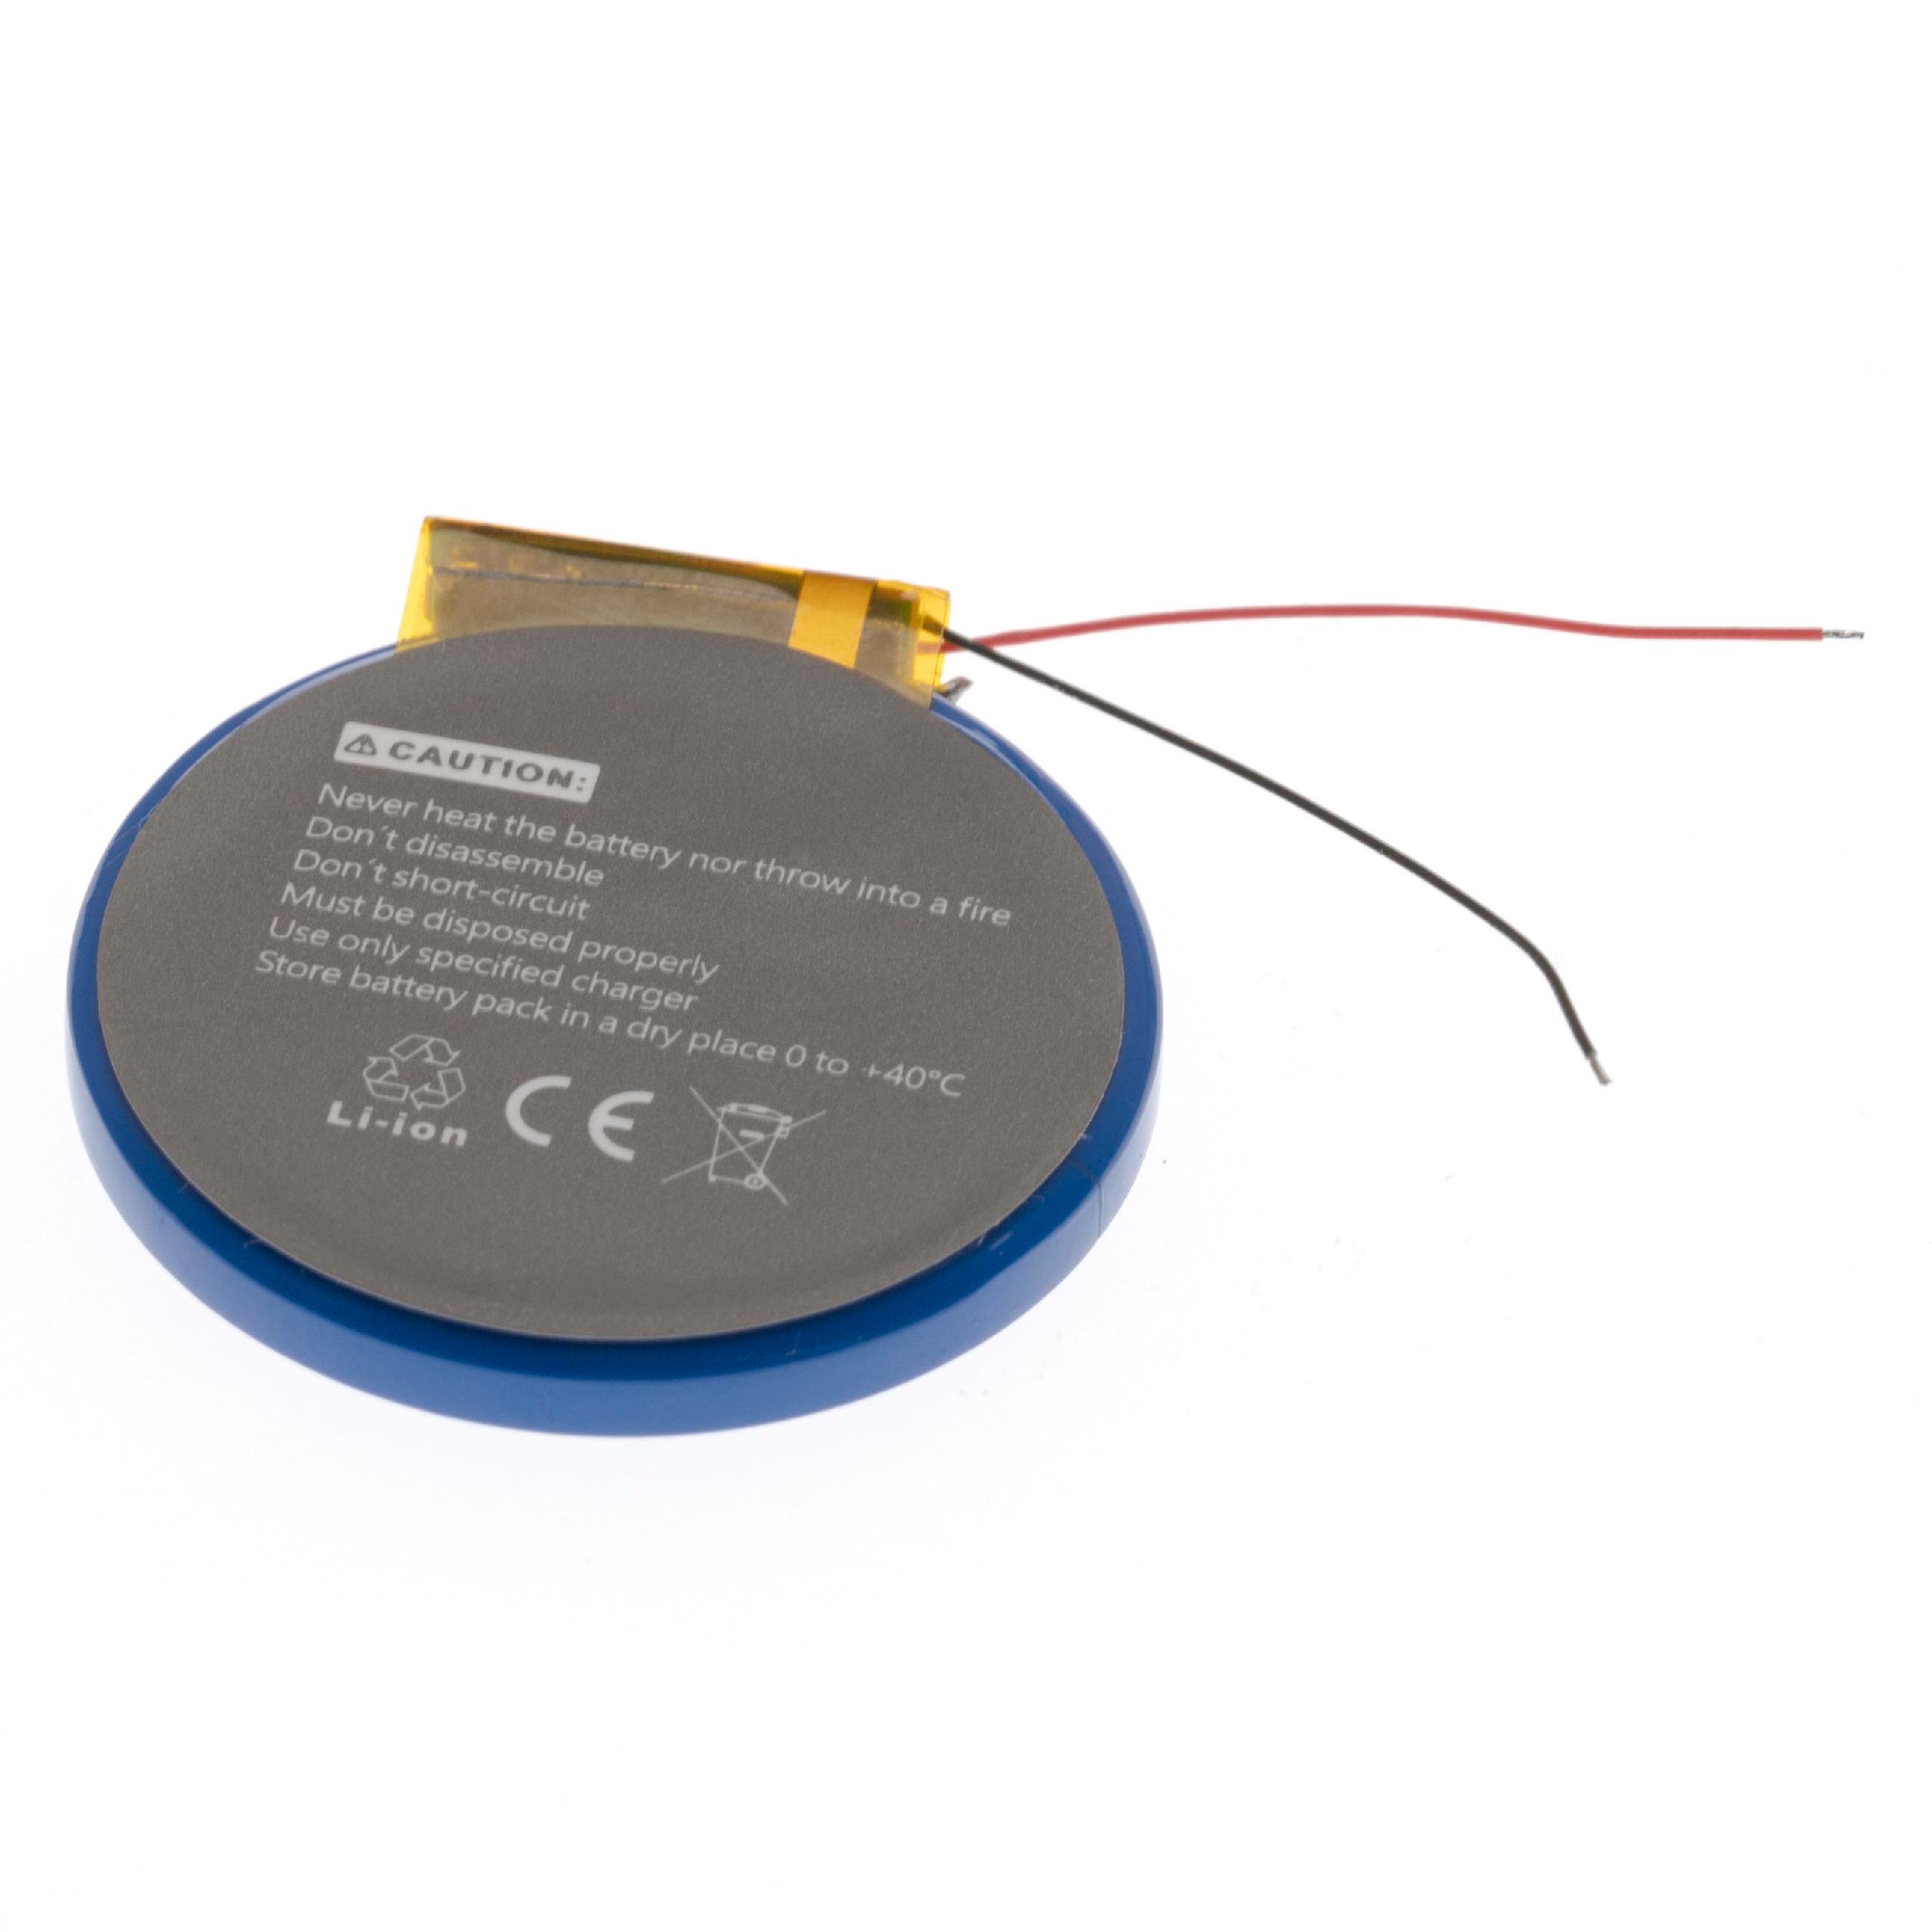 Smartwatch Battery Replacement for Garmin 361-00047-00, 361-00064-00 - 200mAh 3.7V Li-Ion